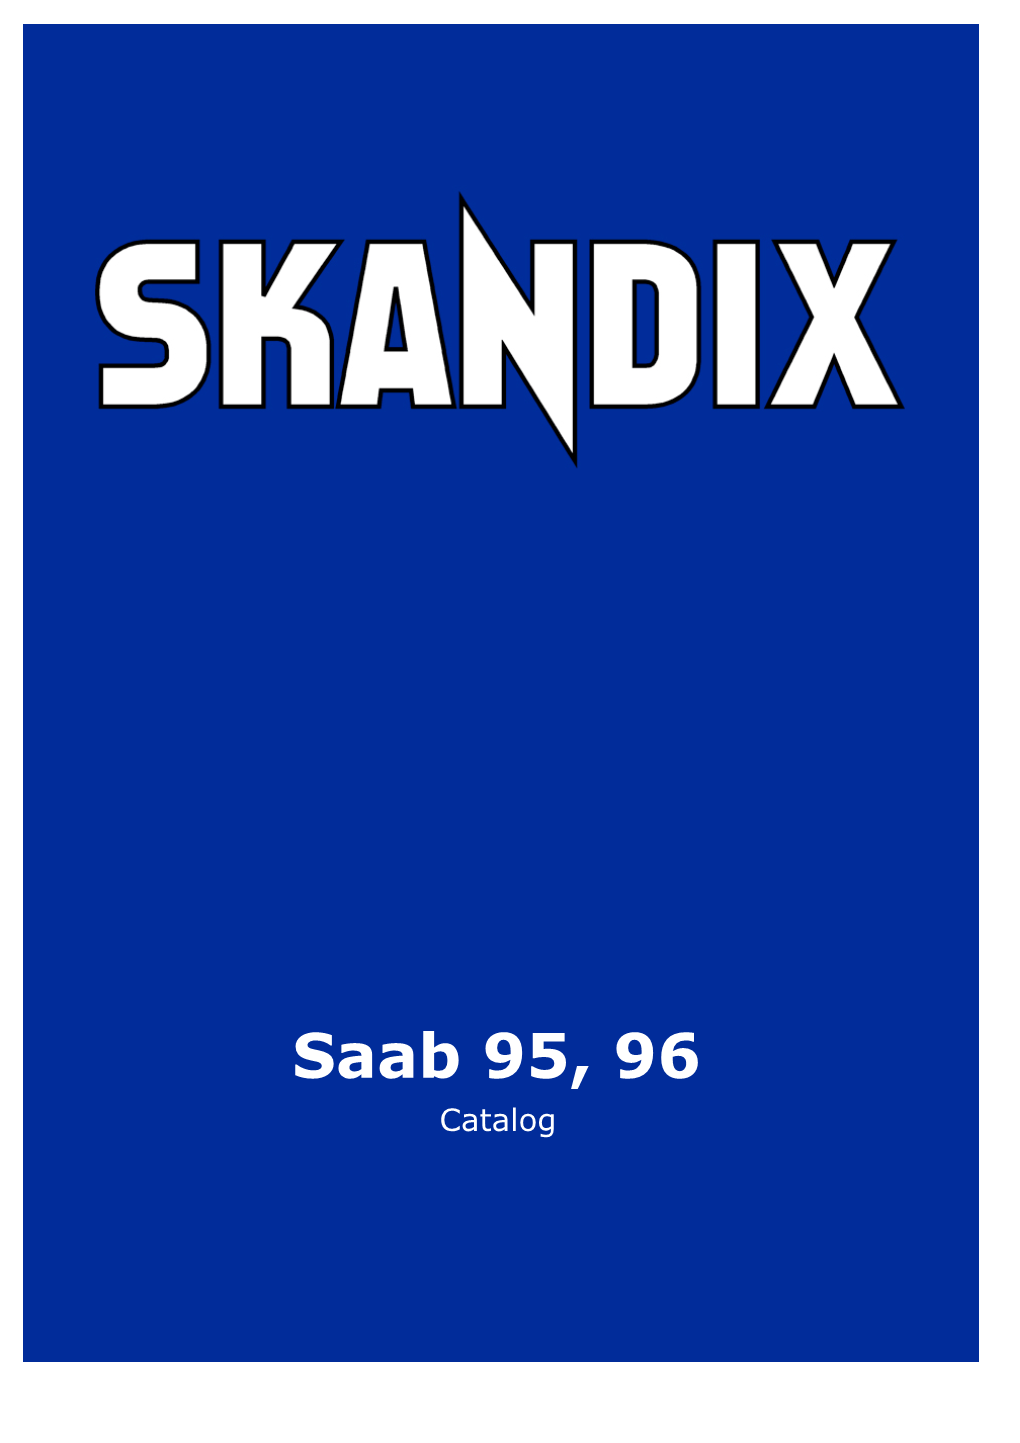 Saab 95, 96 Catalog Contents Saab 95, 96